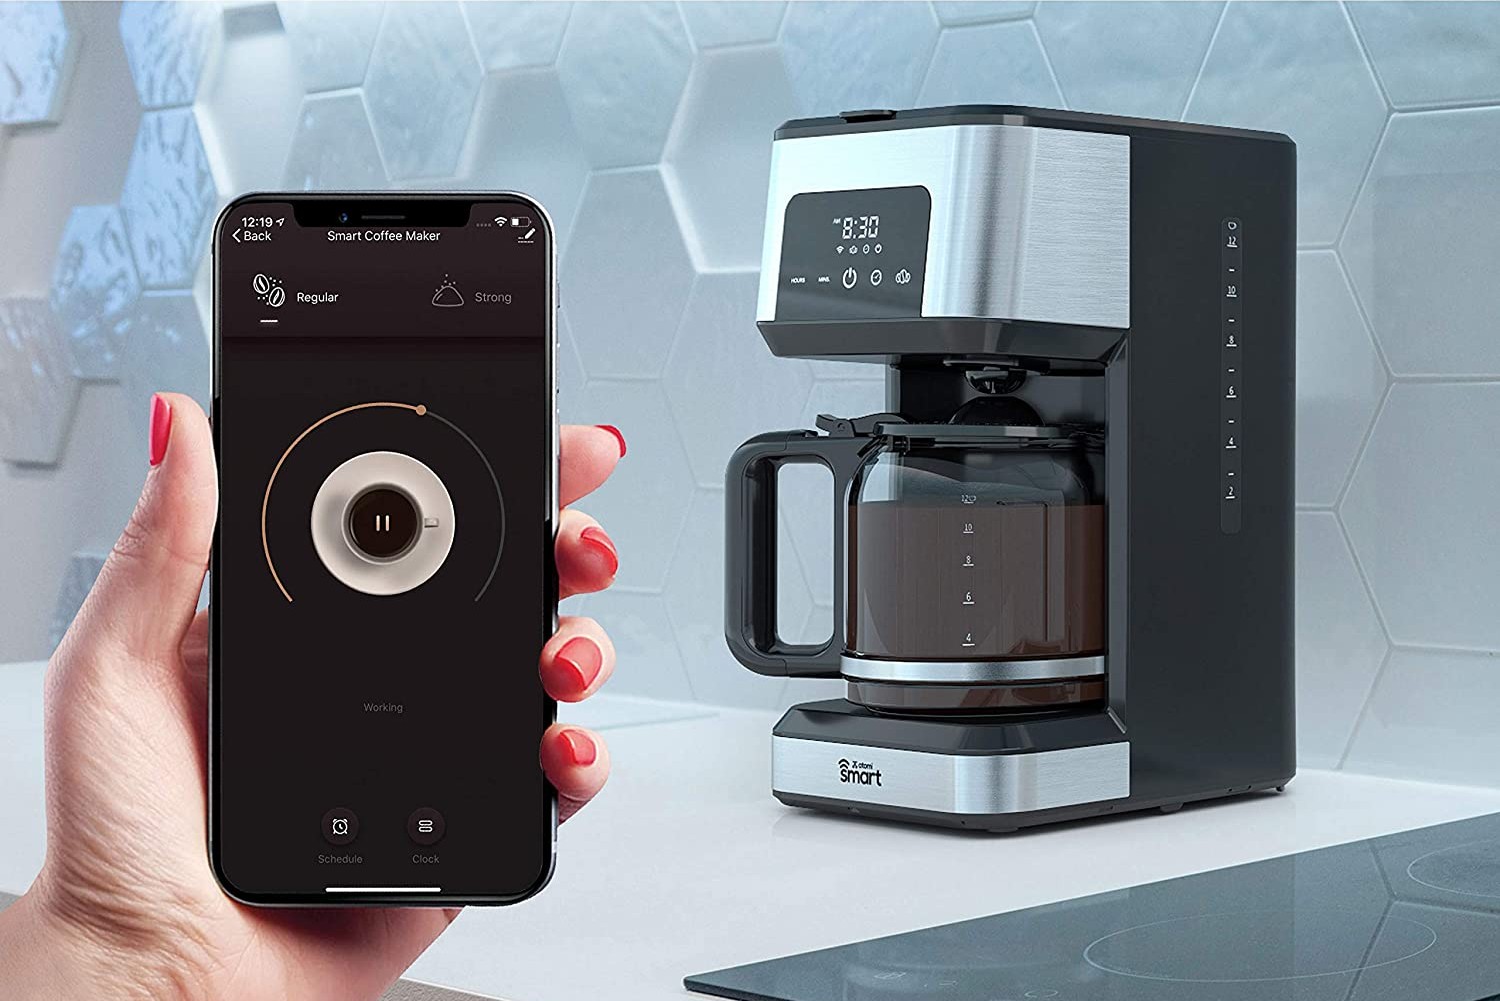 https://www.digitaltrends.com/wp-content/uploads/2021/12/atomi-smart-coffee-maker.jpg?fit=1500%2C1001&p=1